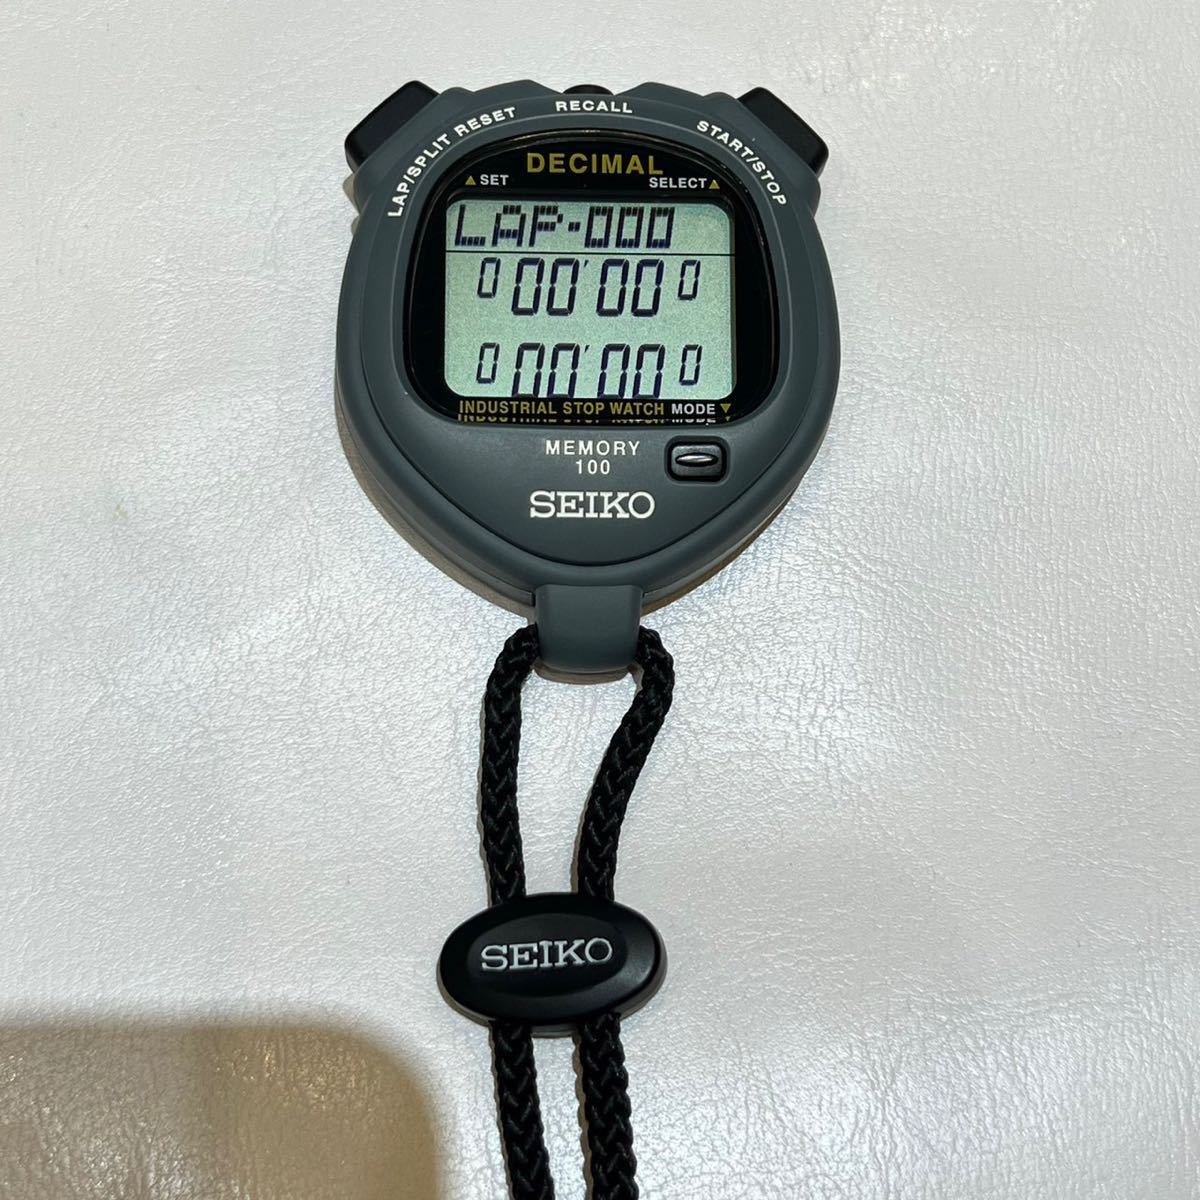 [ быстрое решение ] прекрасный товар батарейка заменена SEIKO Seiko секундомер Seiko секундомер часы s05a-4000 decimal водонепроницаемый bar5